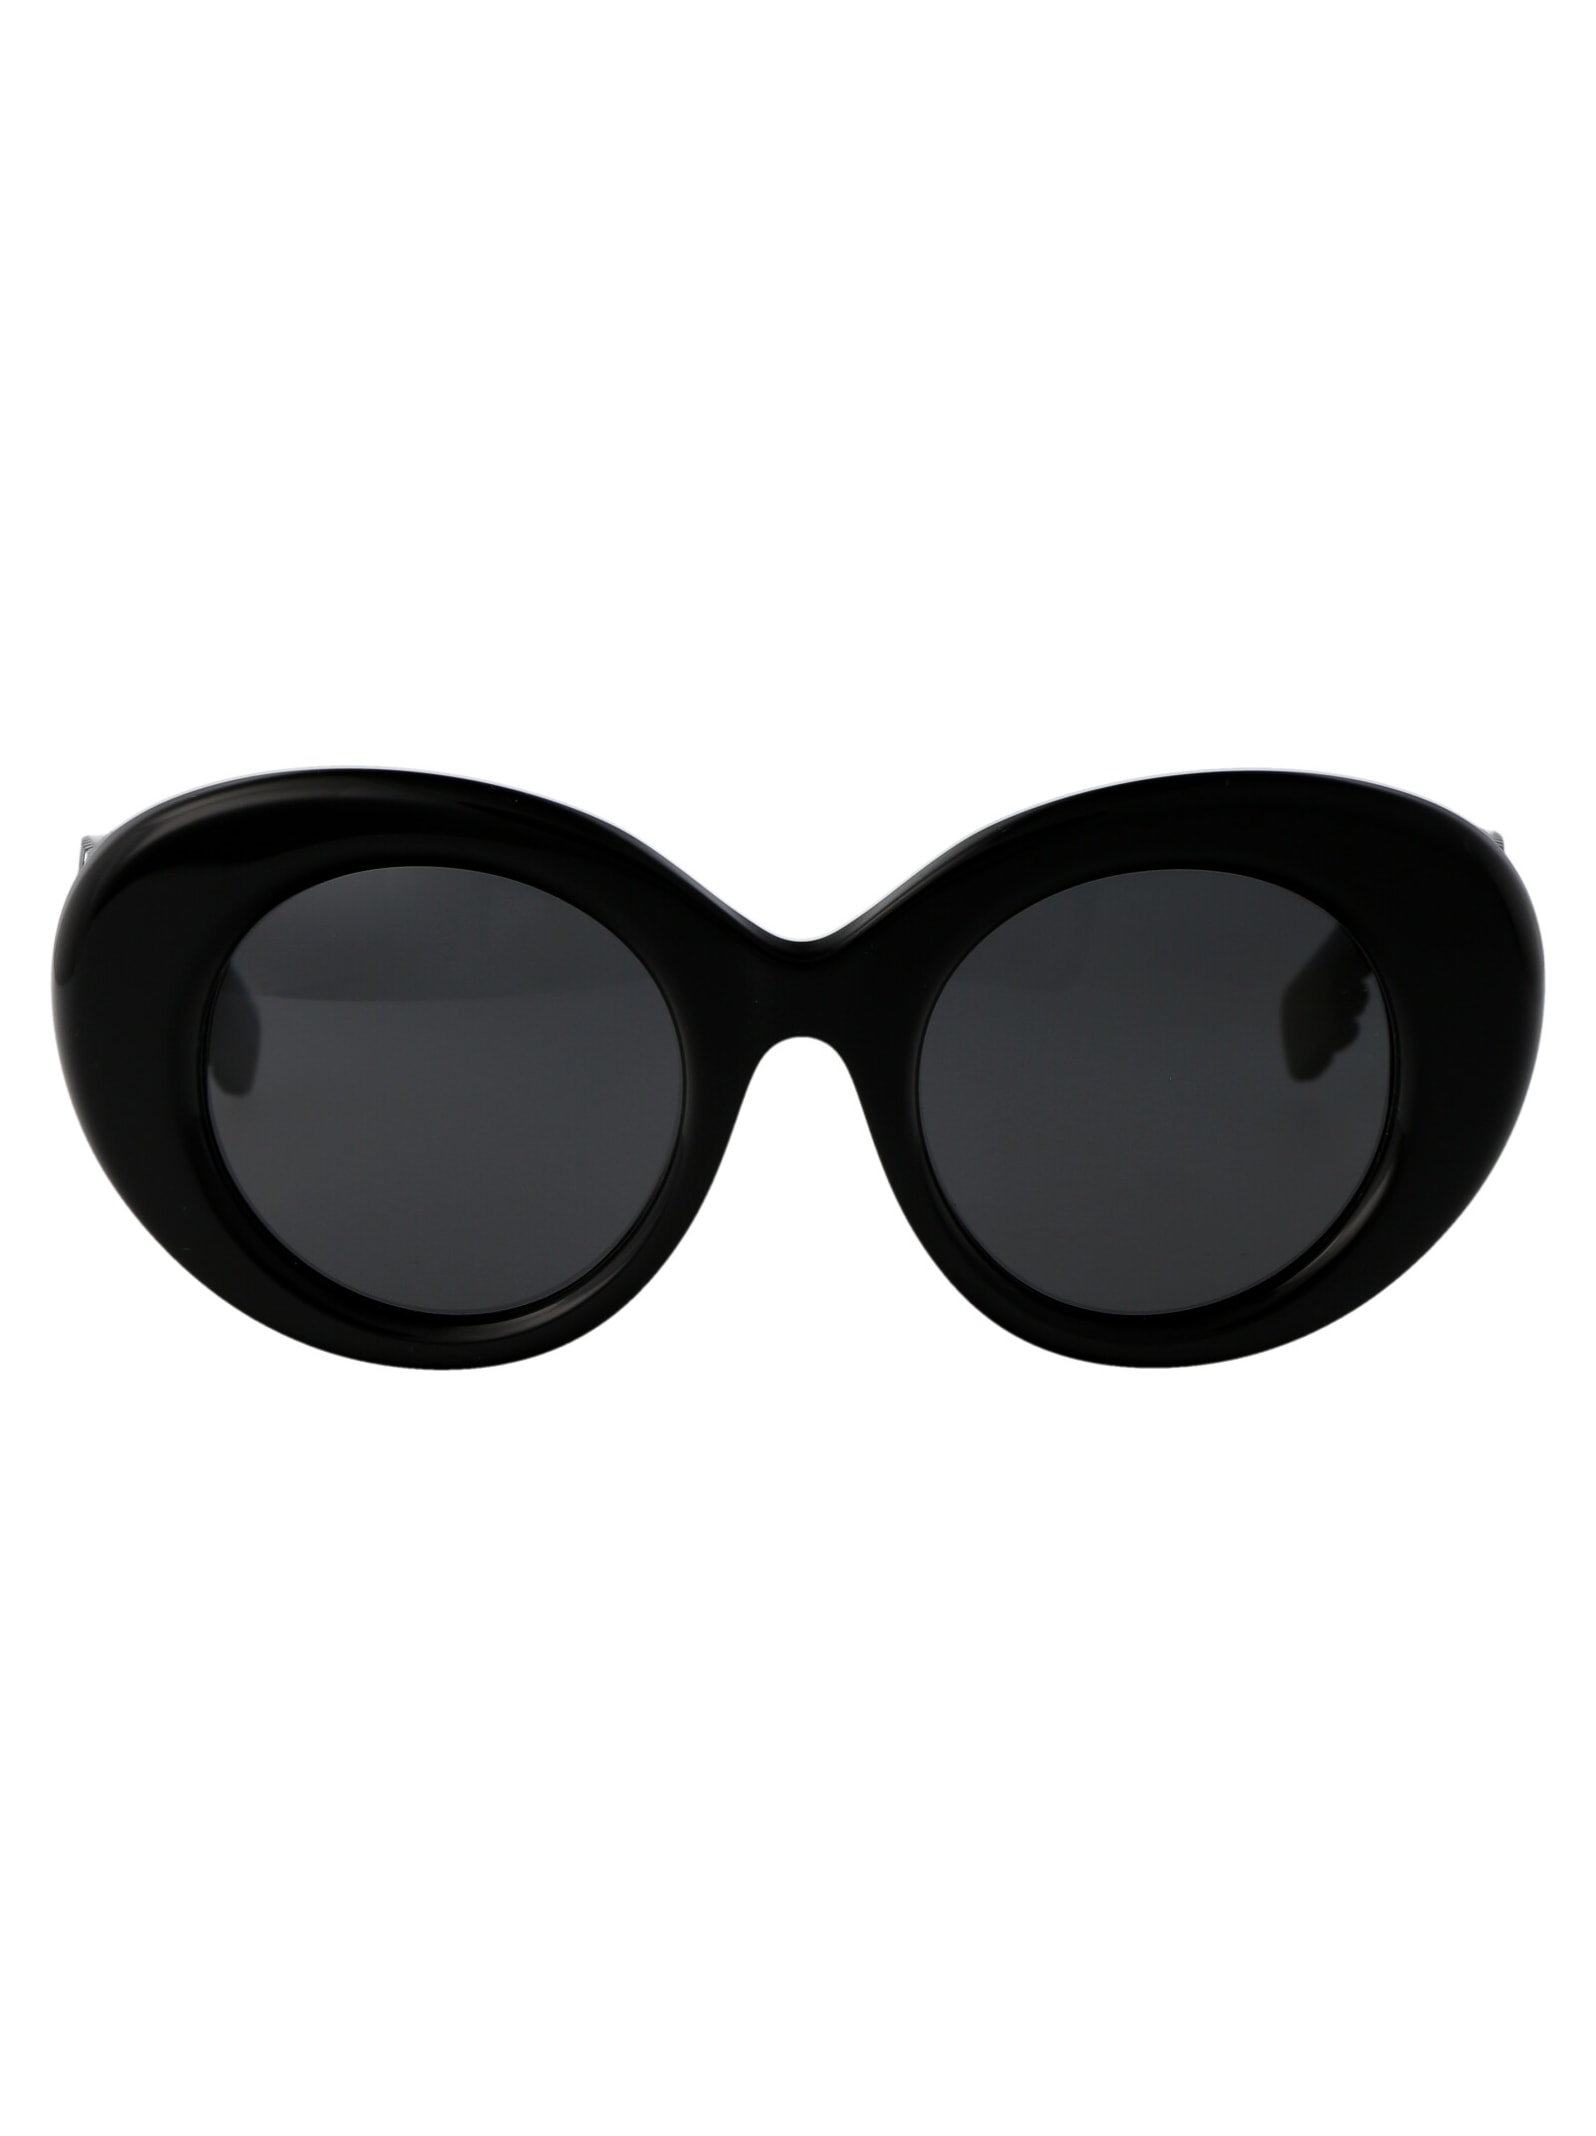 Burberry Eyewear Margot Sunglasses